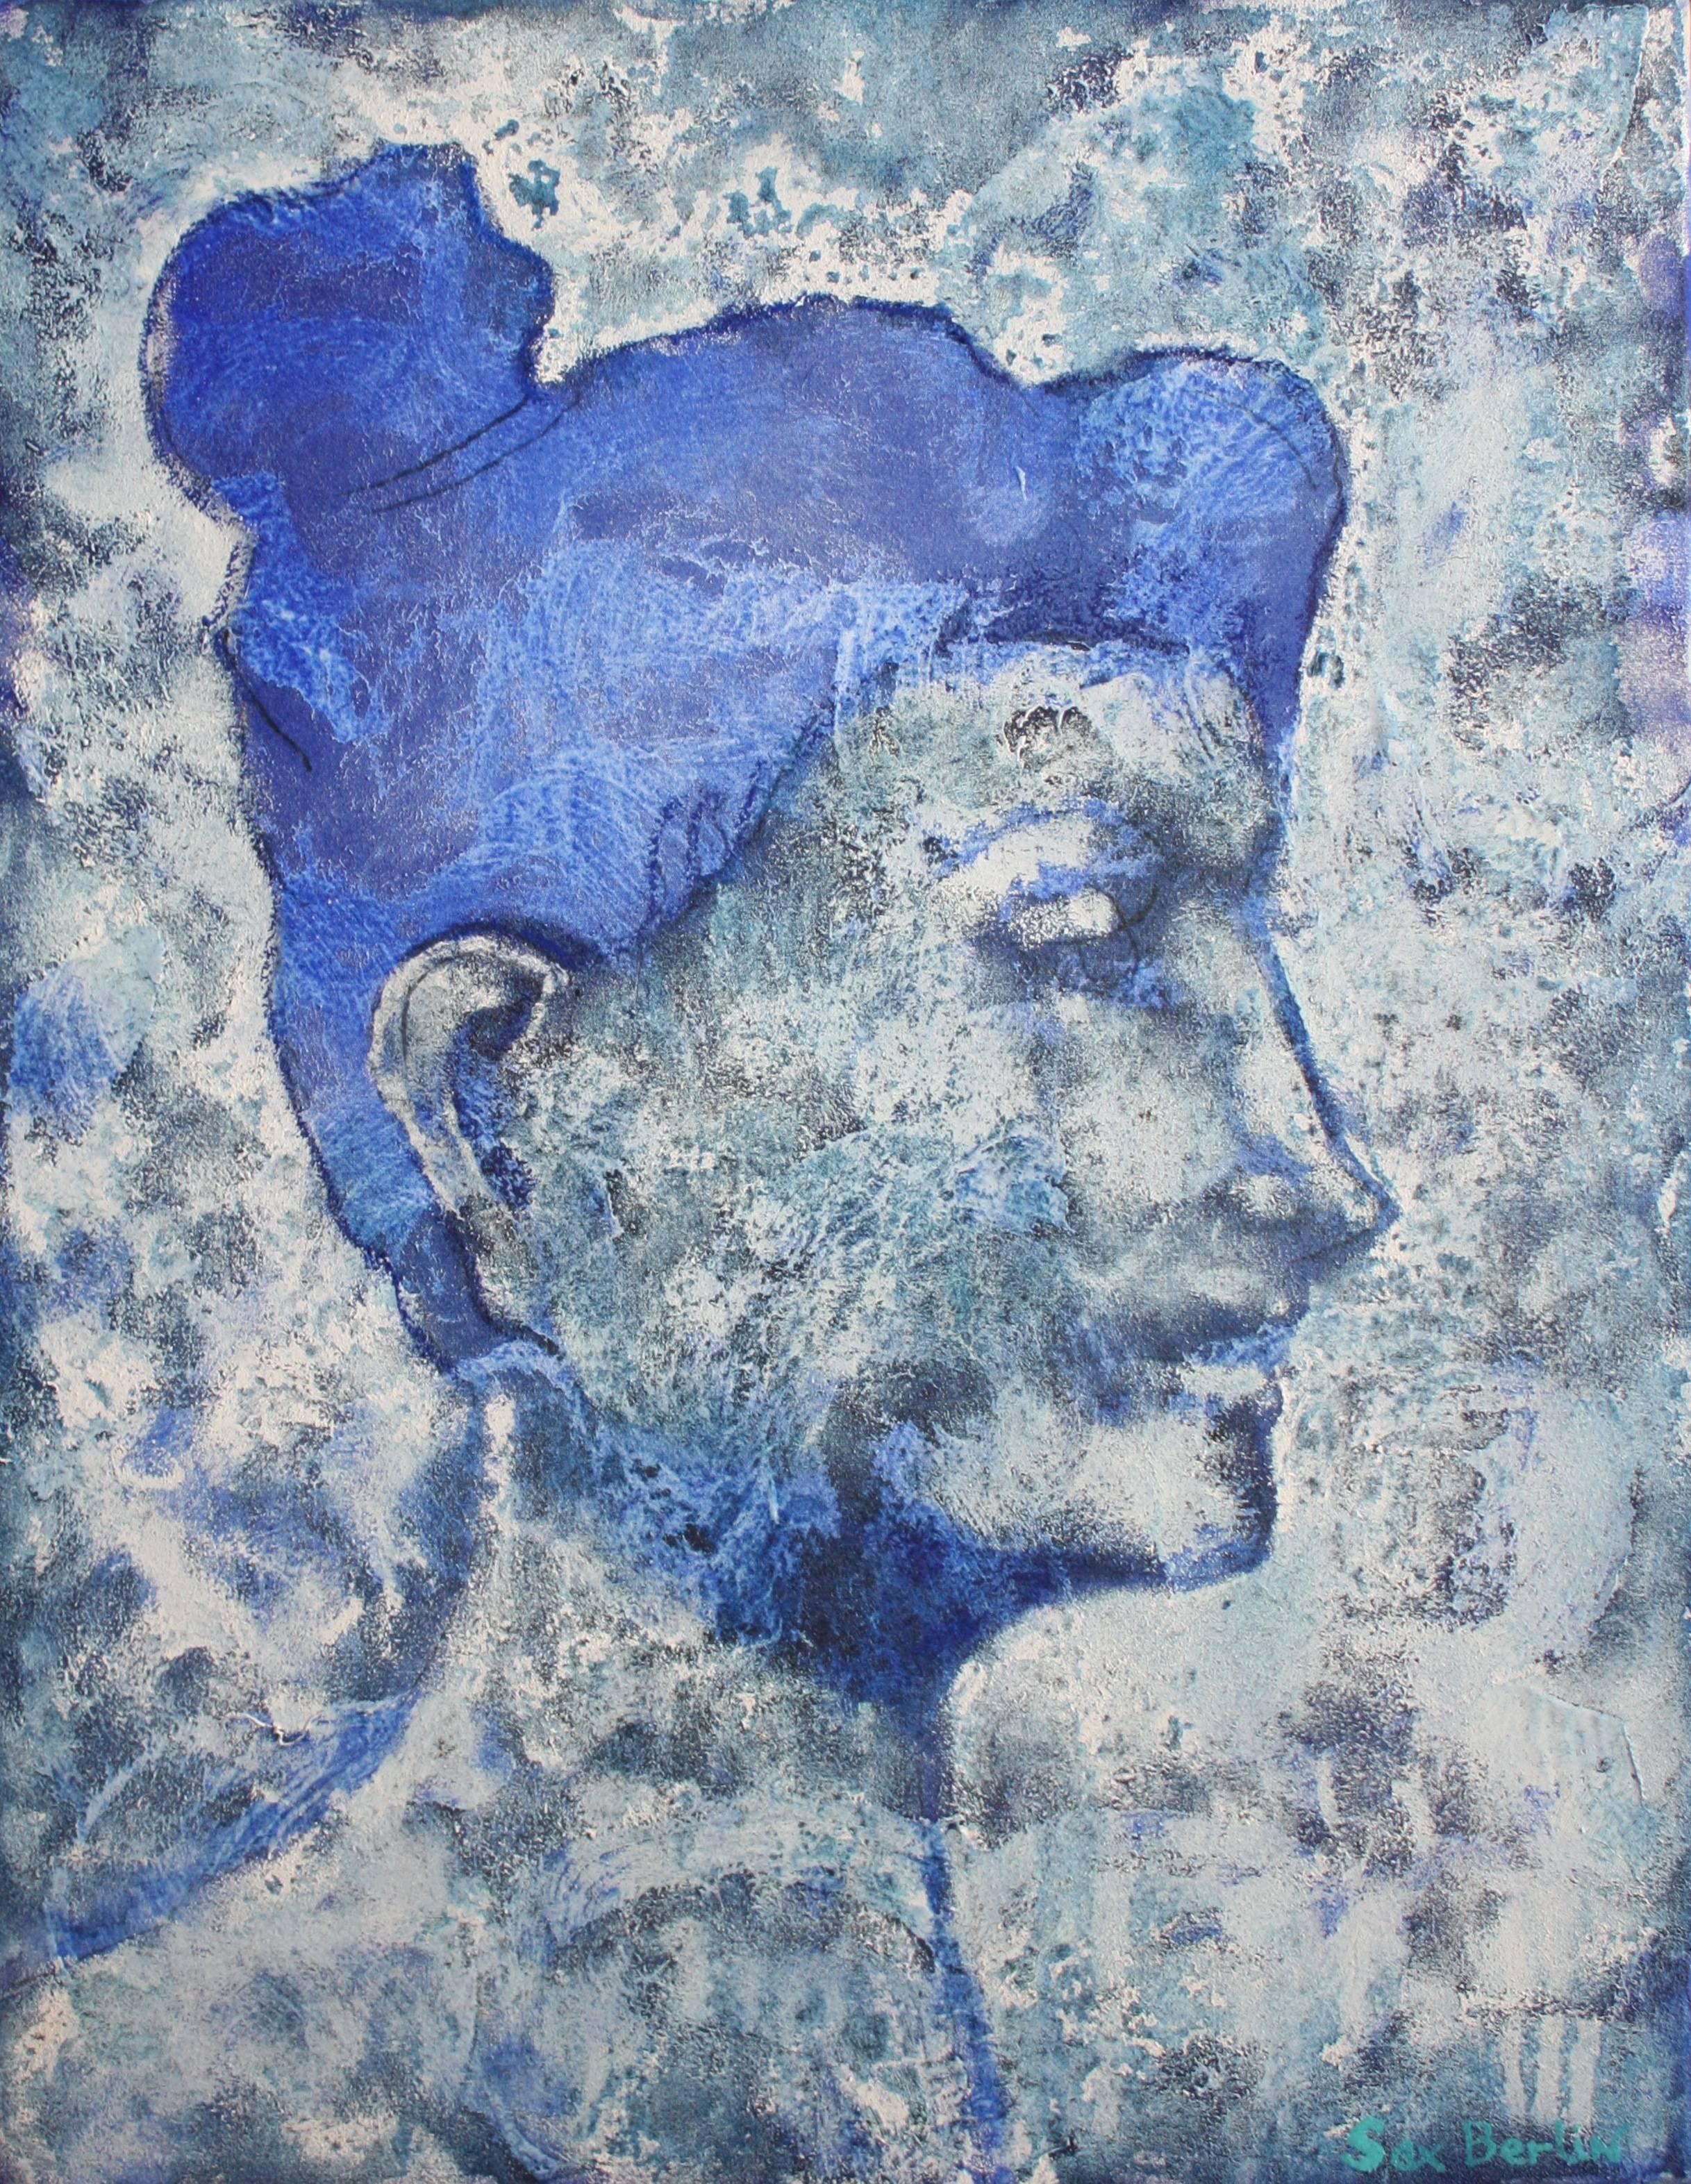 Figurative Painting Sax Berlin - Bleu classique. Peinture à l'huile figurative contemporaine